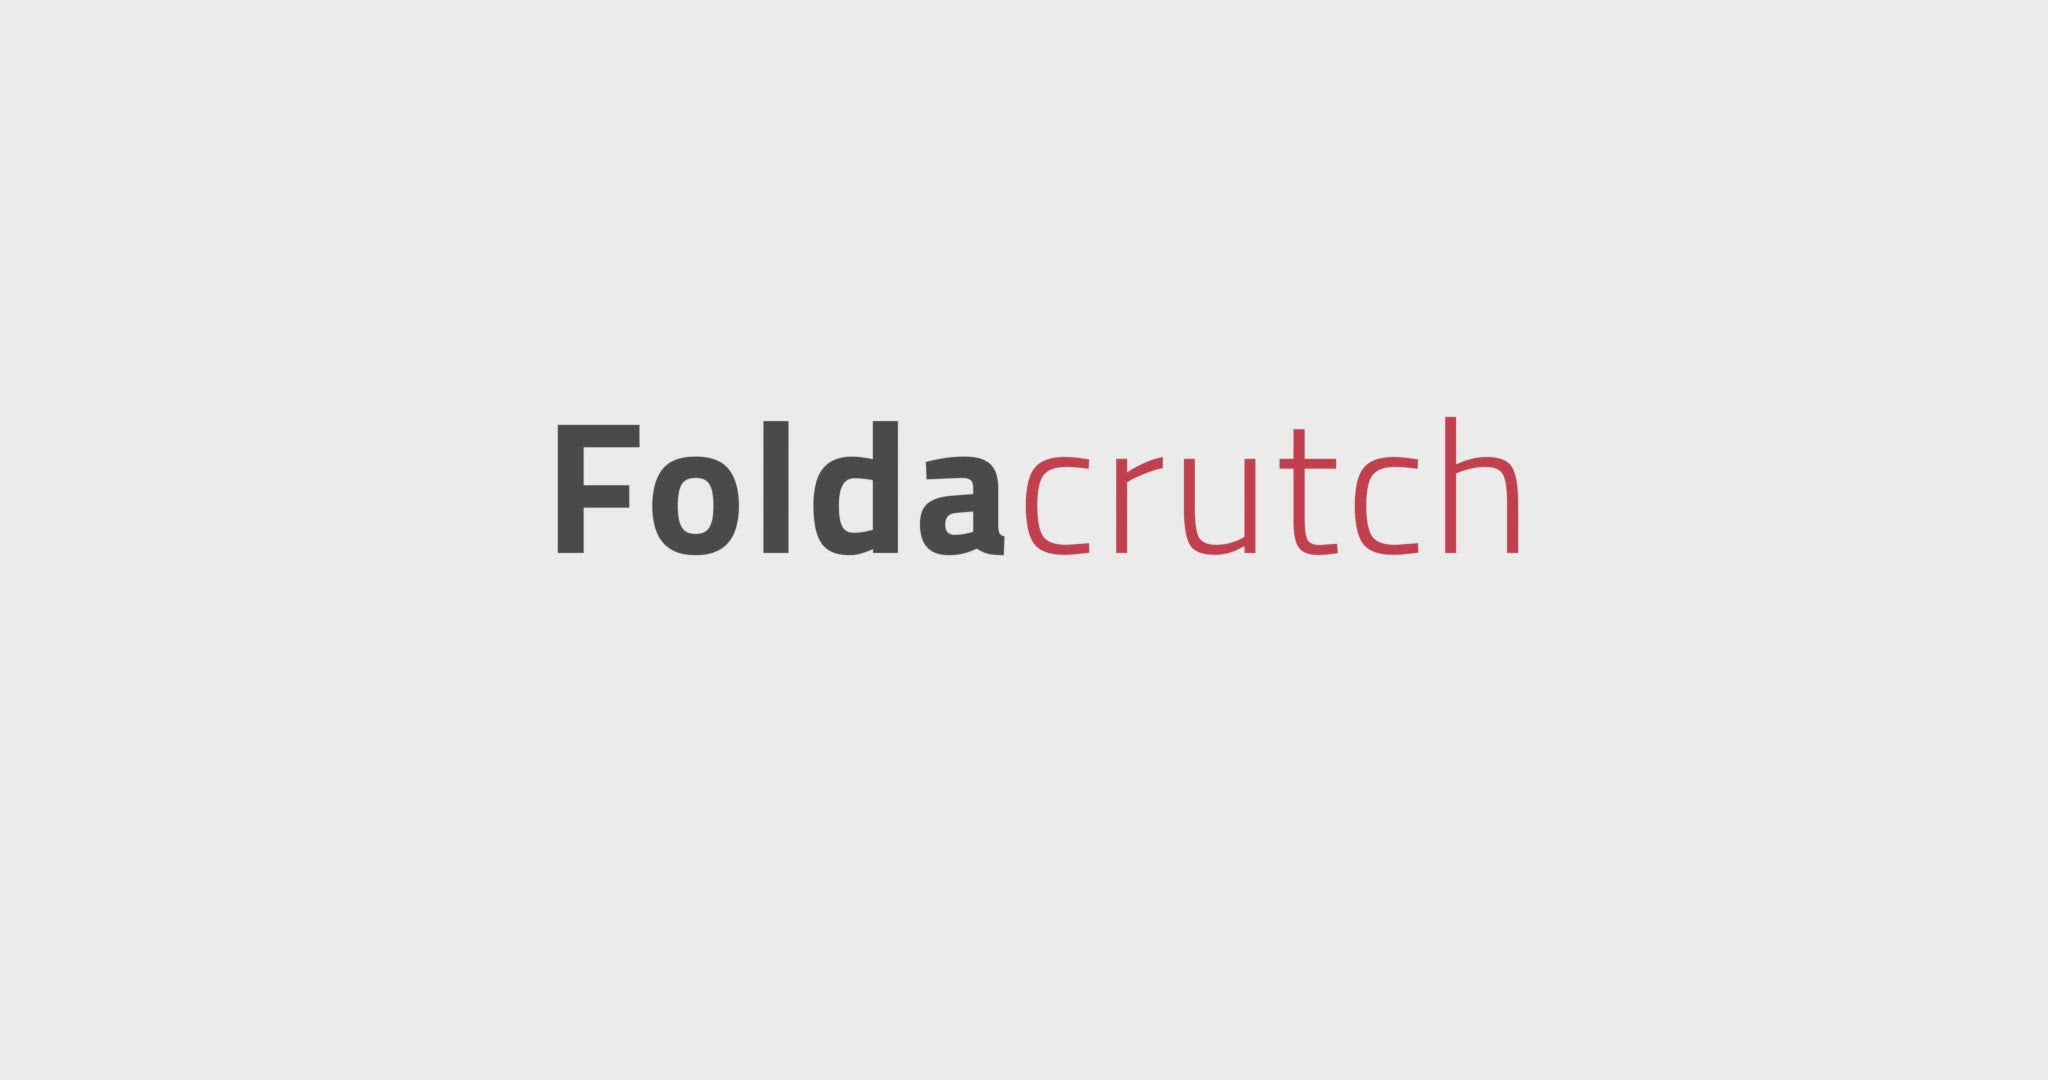 Foldacrutch - The Ultimate Folding Crutches